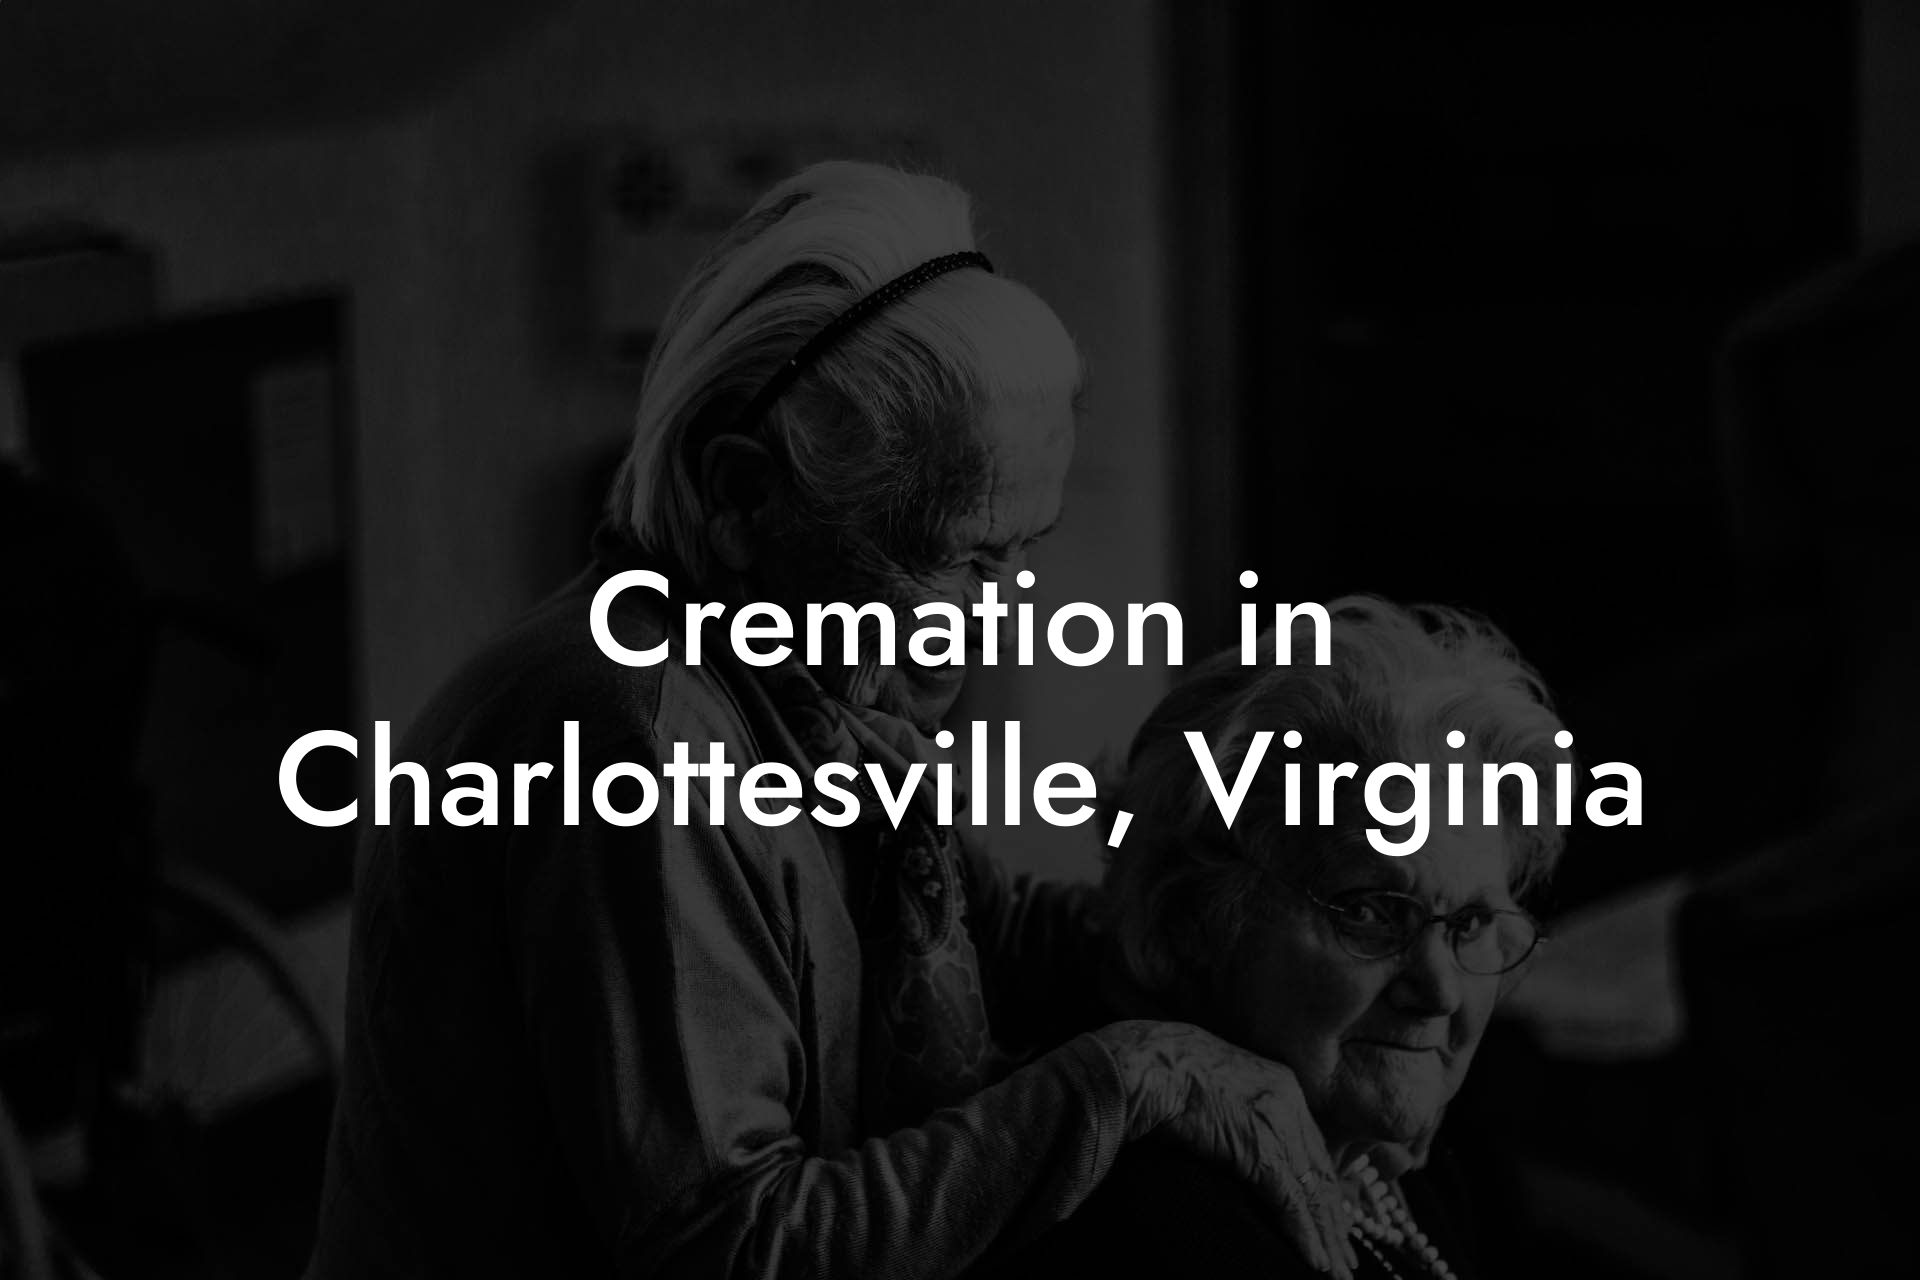 Cremation in Charlottesville, Virginia